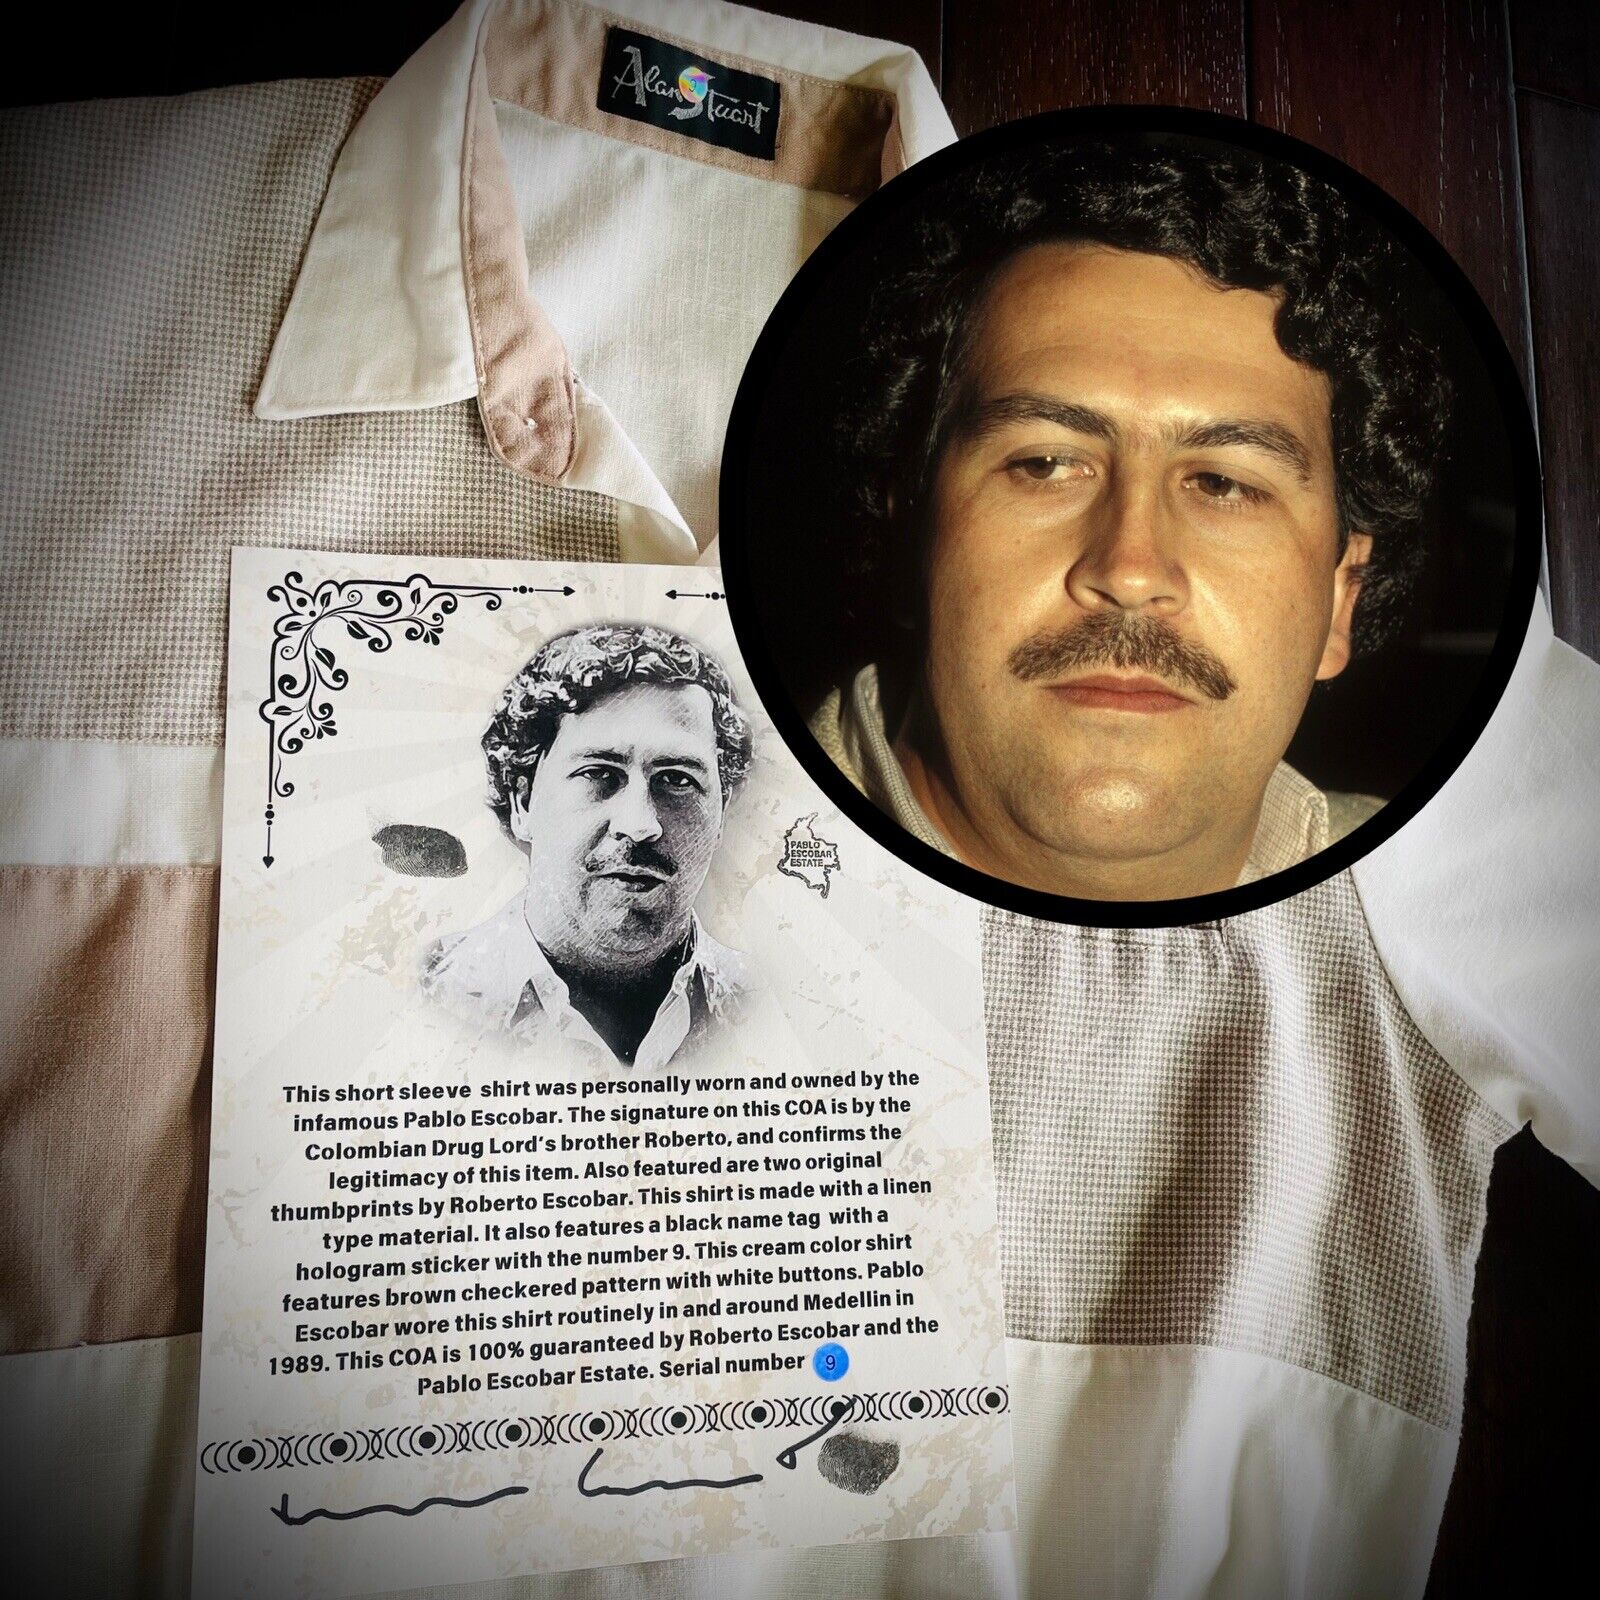 ⭐️ Pablo Escobar Personal Worn Shirt Celebrity Collectible Memorabilia Signature